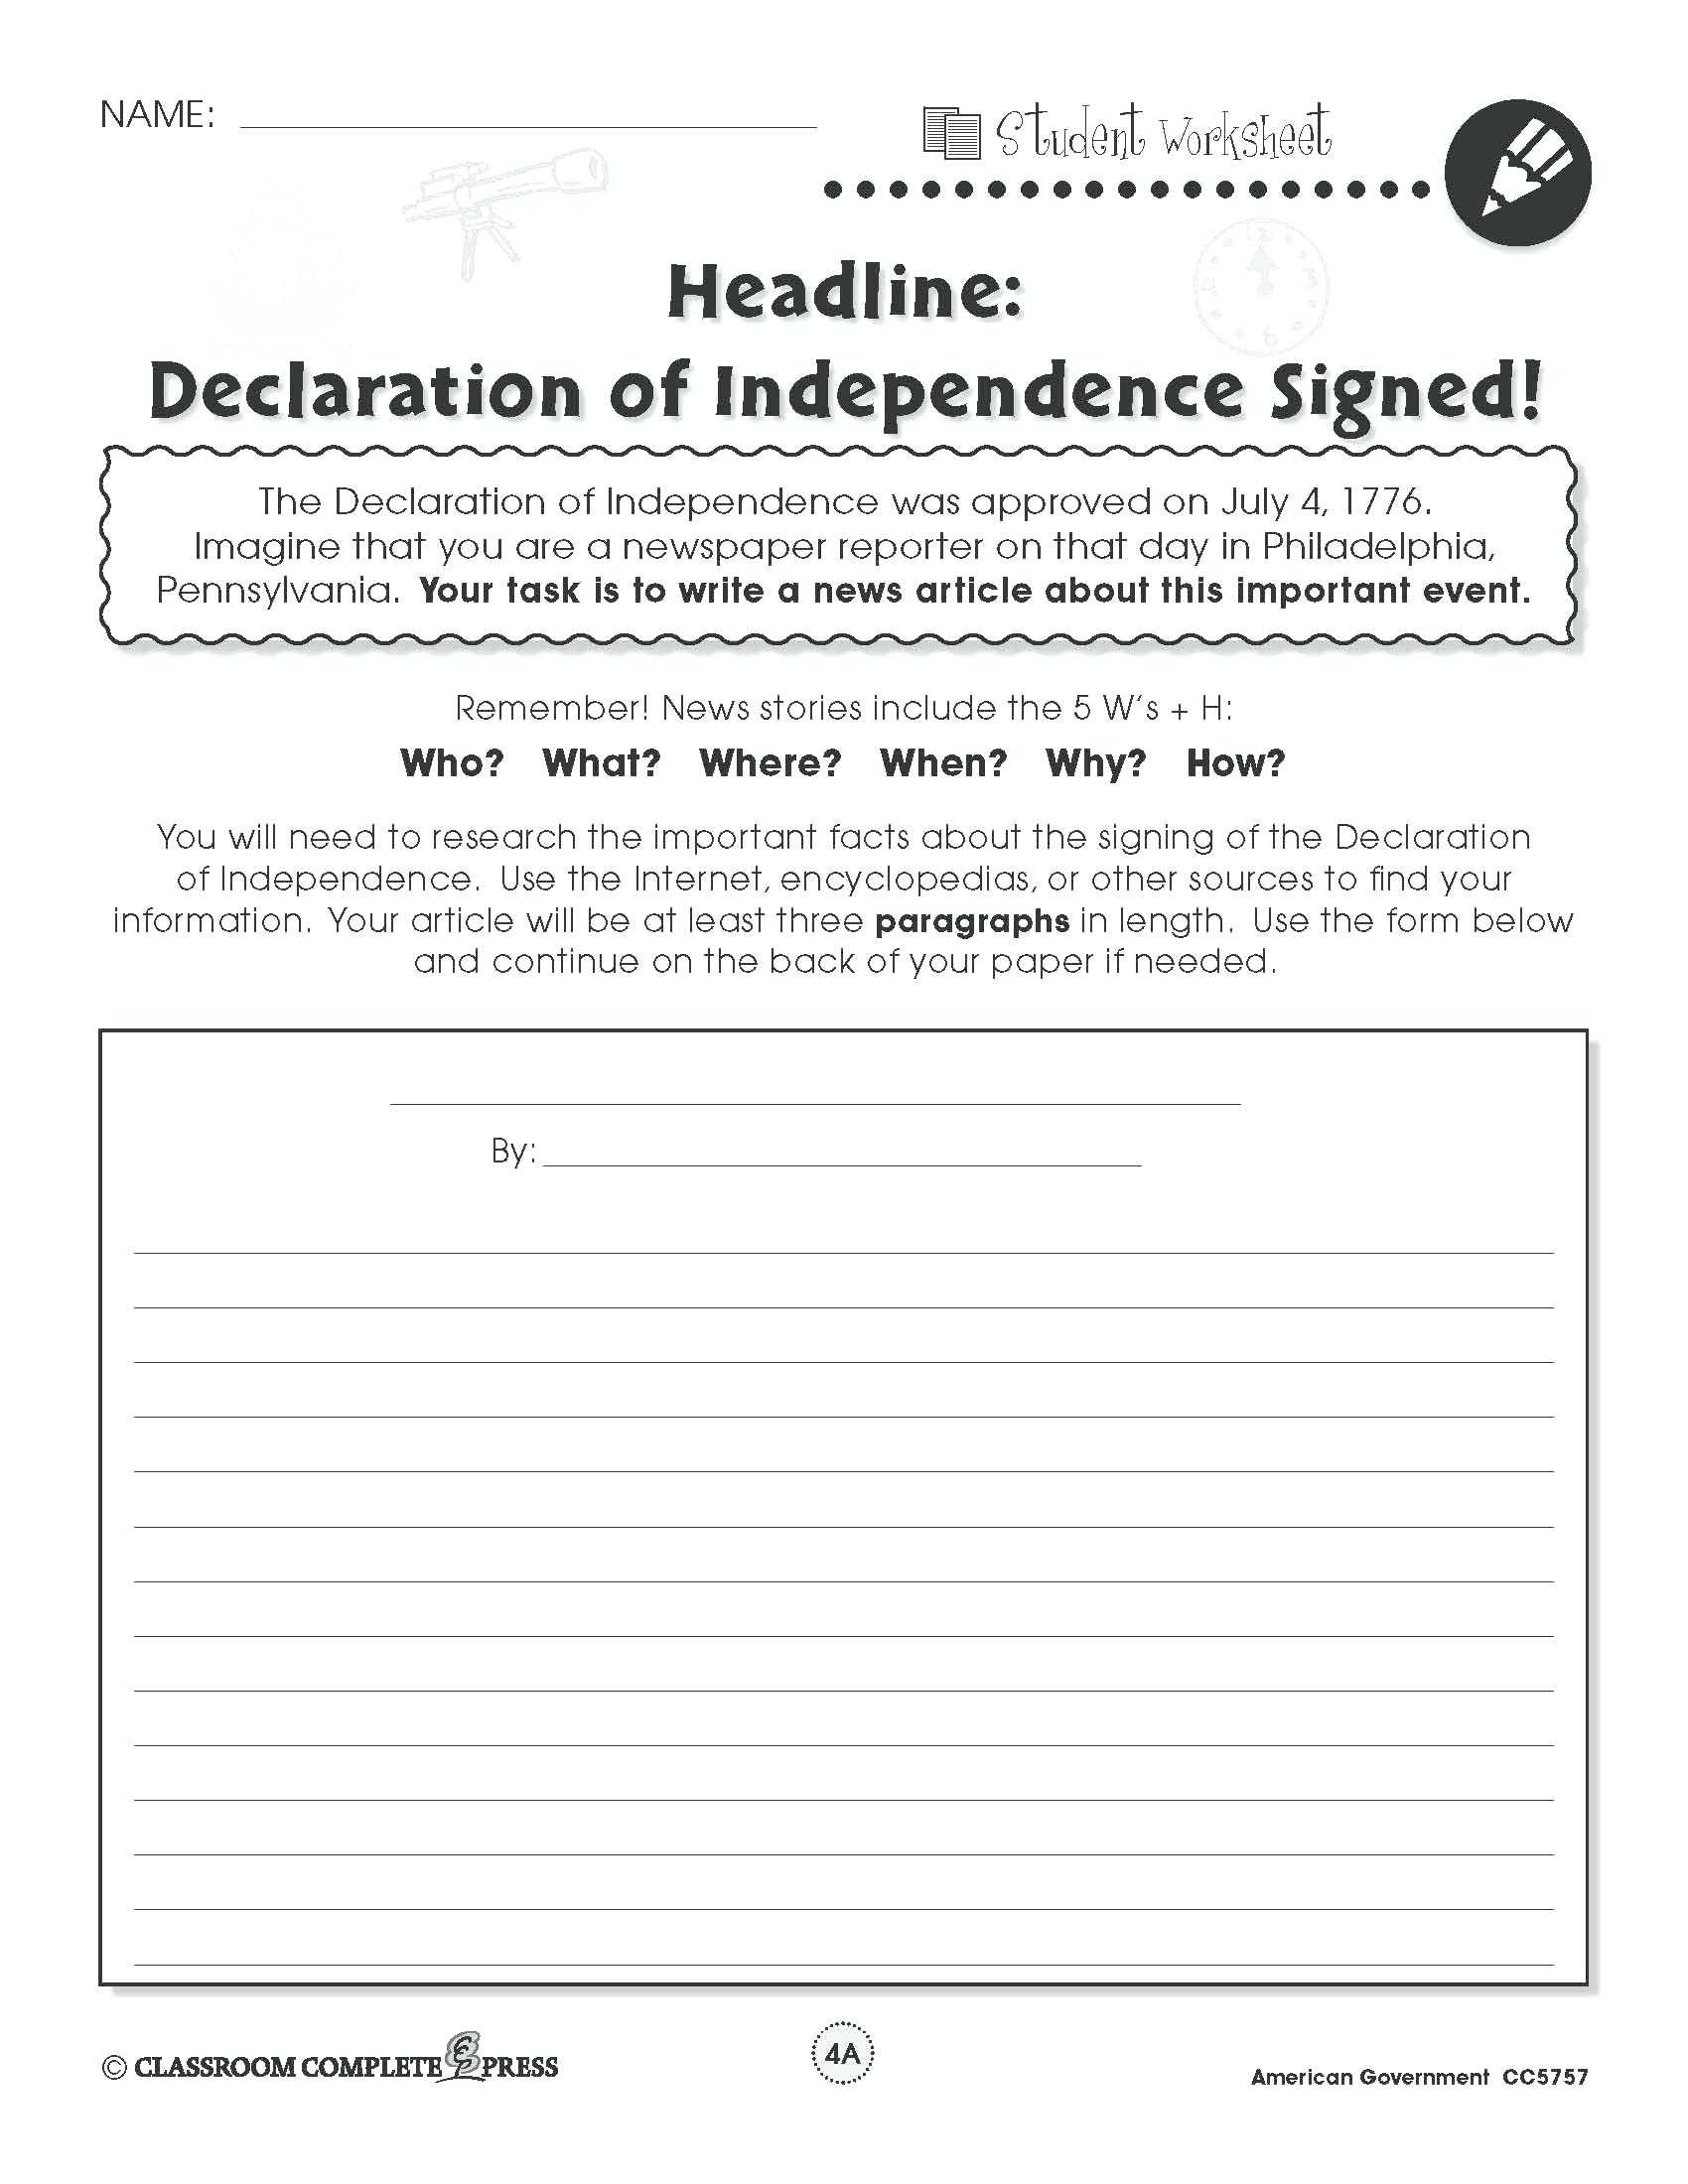 Unscramble Sentences Worksheets 1st Grade together with Declaration Independence Worksheets for 2nd Grade the Best